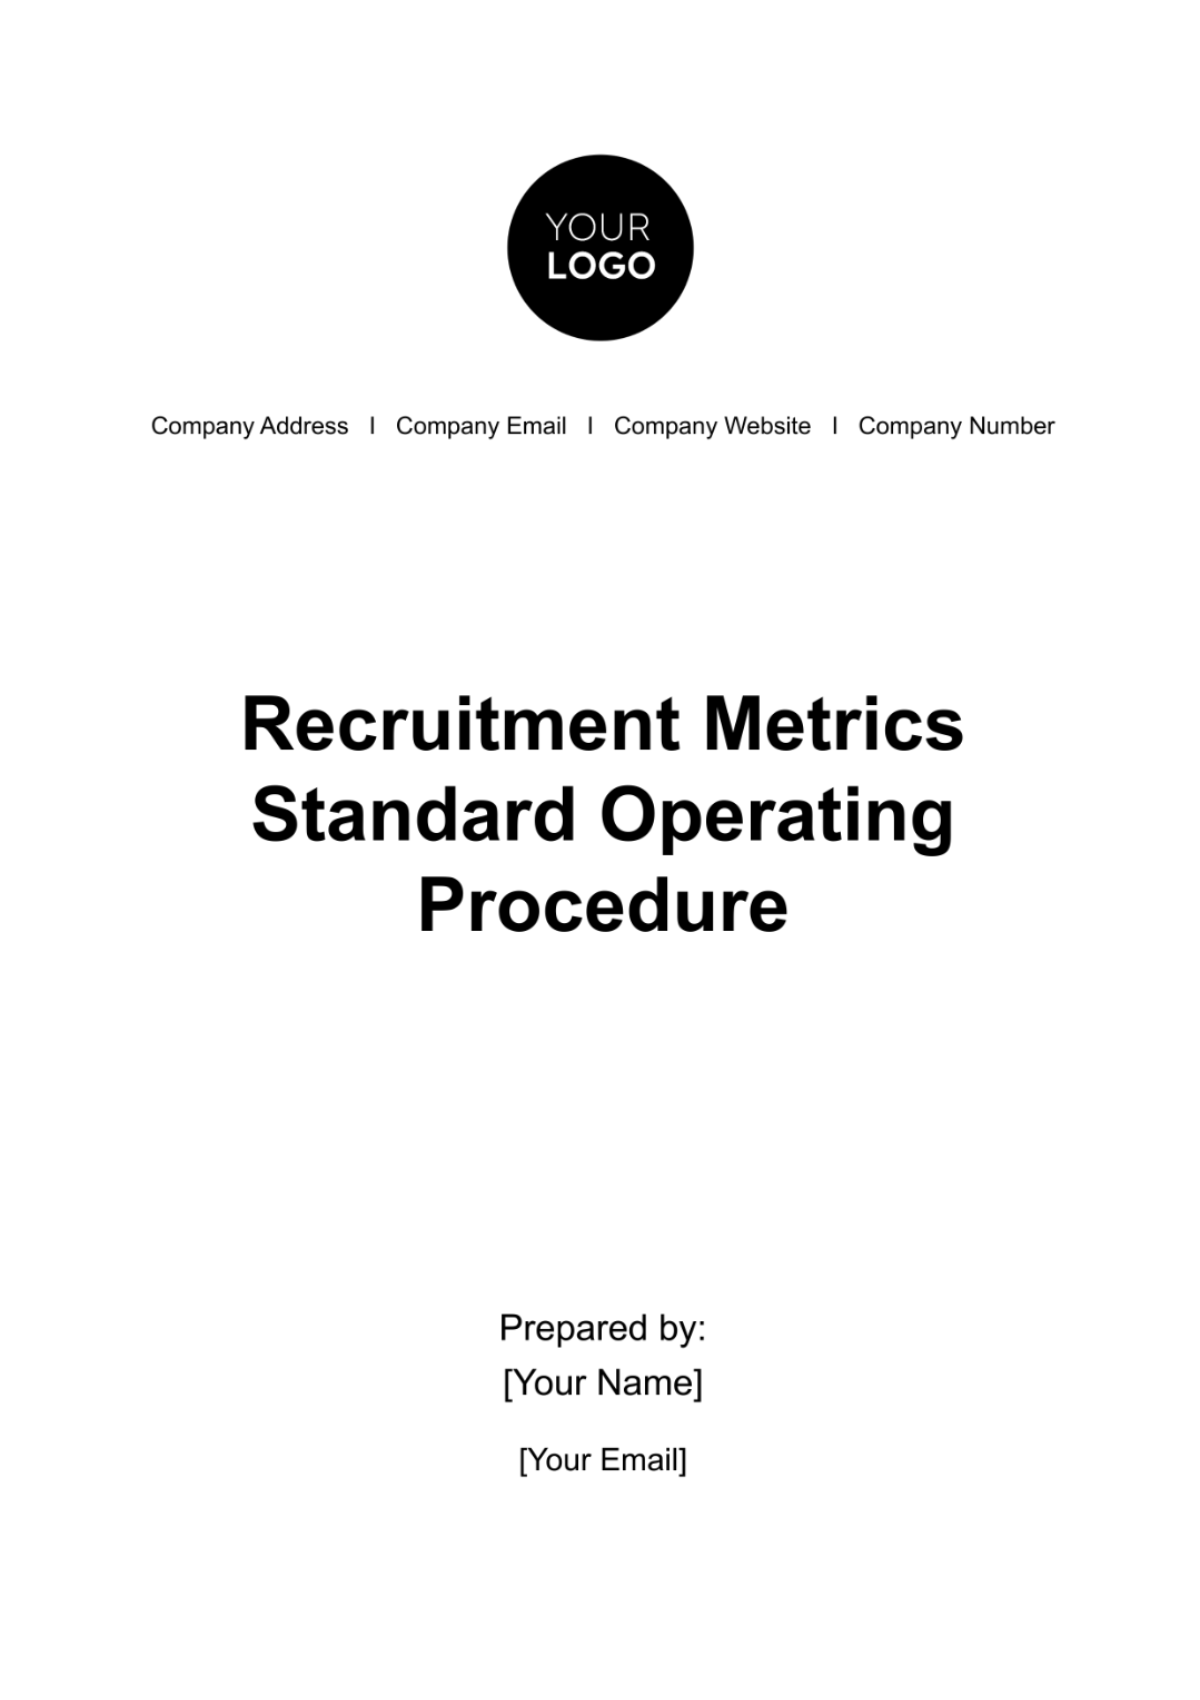 Recruitment Metrics SOP HR Template